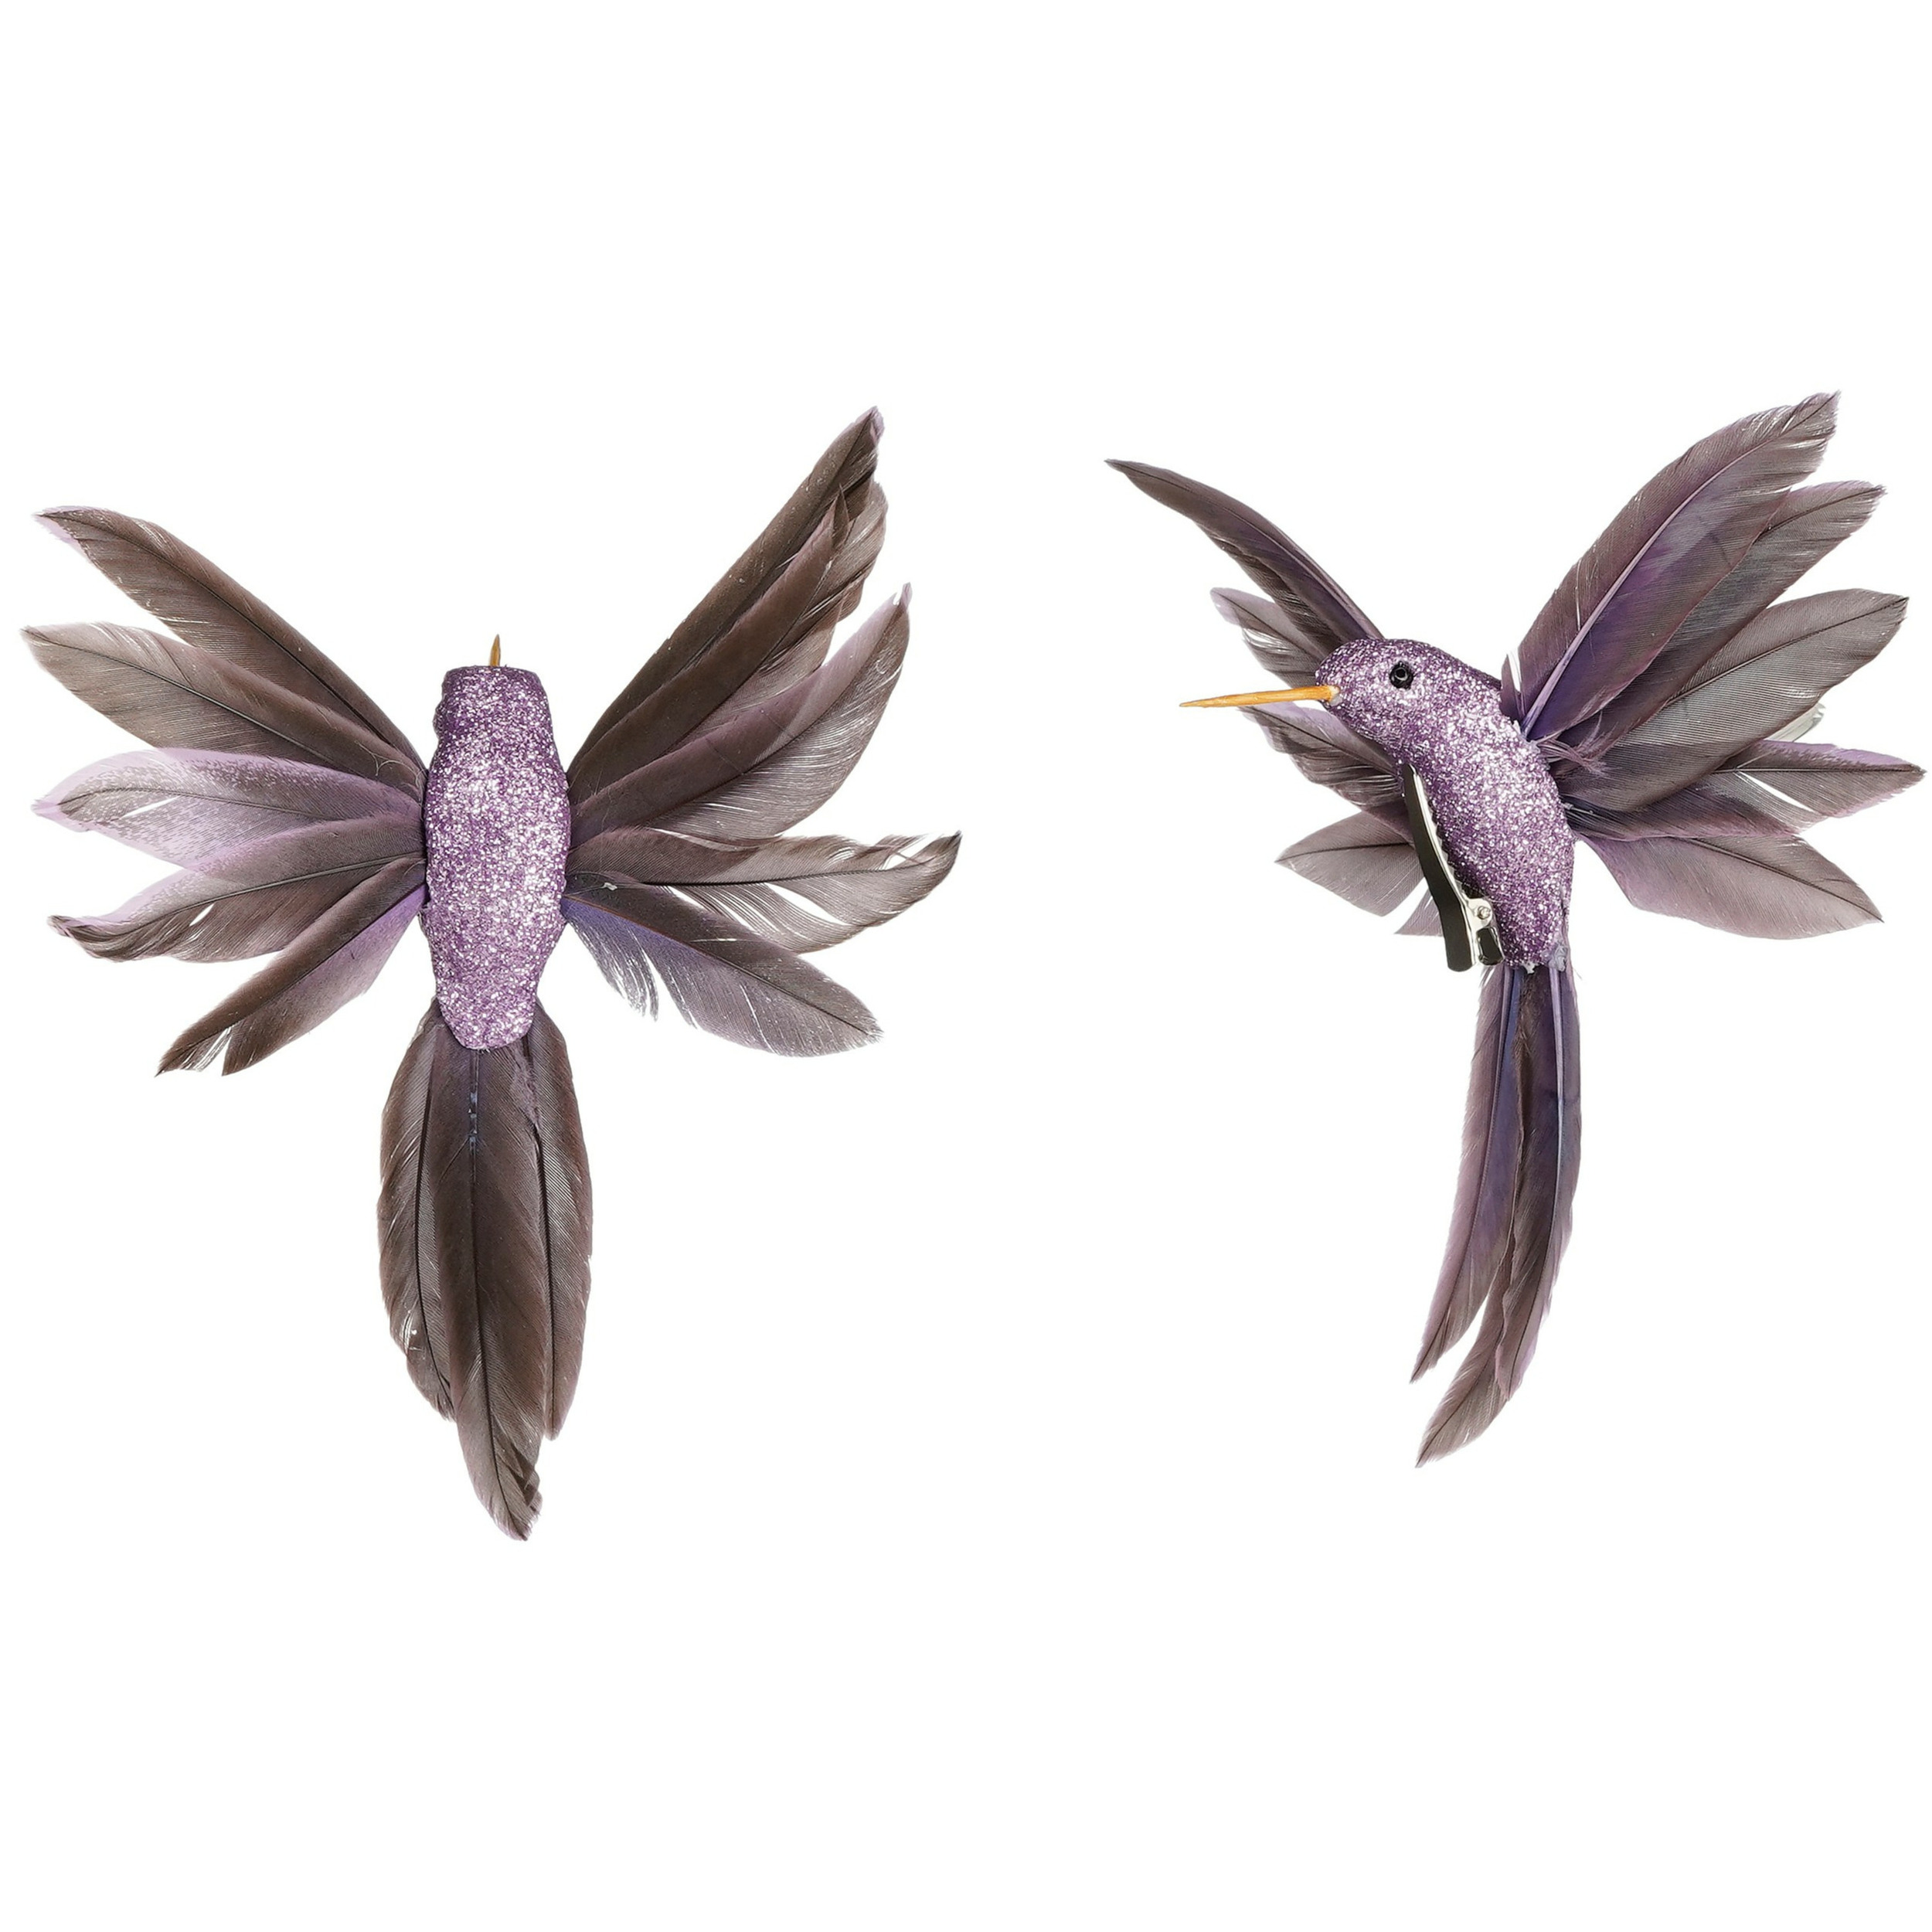 House of Seasons kolibries - decoratie vogels op clip - lila paars - 14,5cm